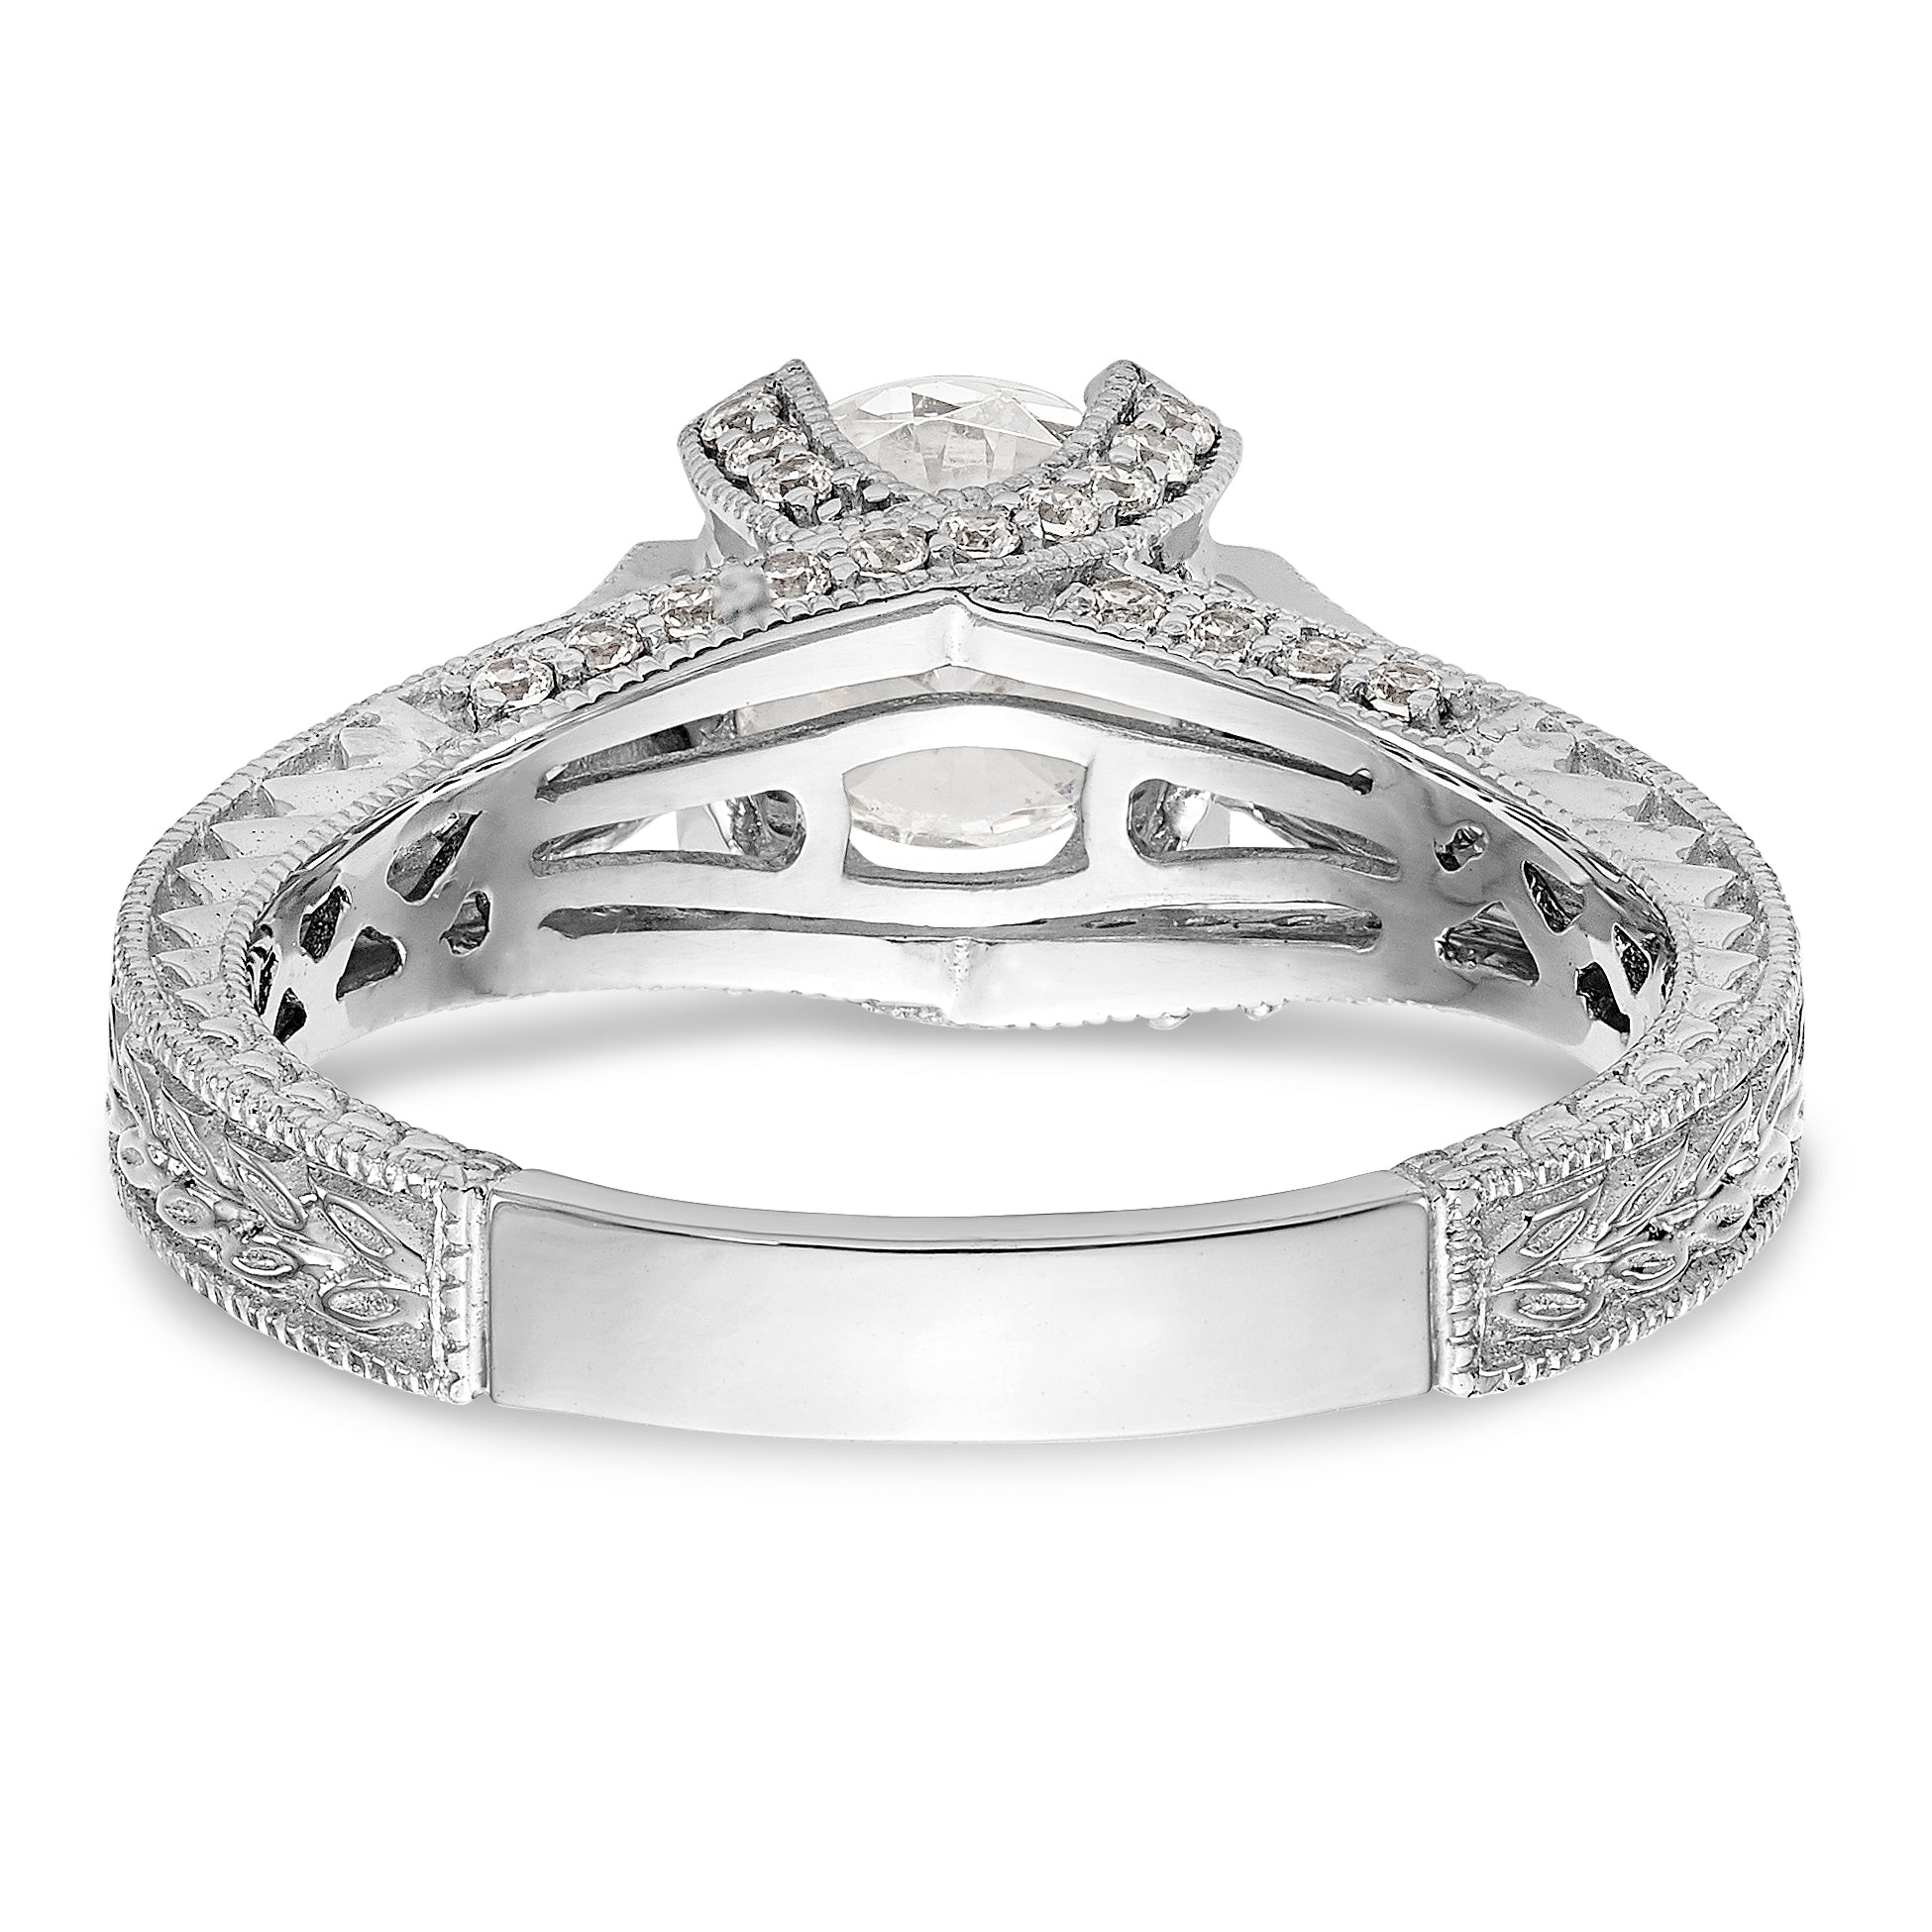 14K White Gold (Holds 1 carat (6.5mm) Round Center) 1/3 carat Diamond Semi-Mount Engagement Ring